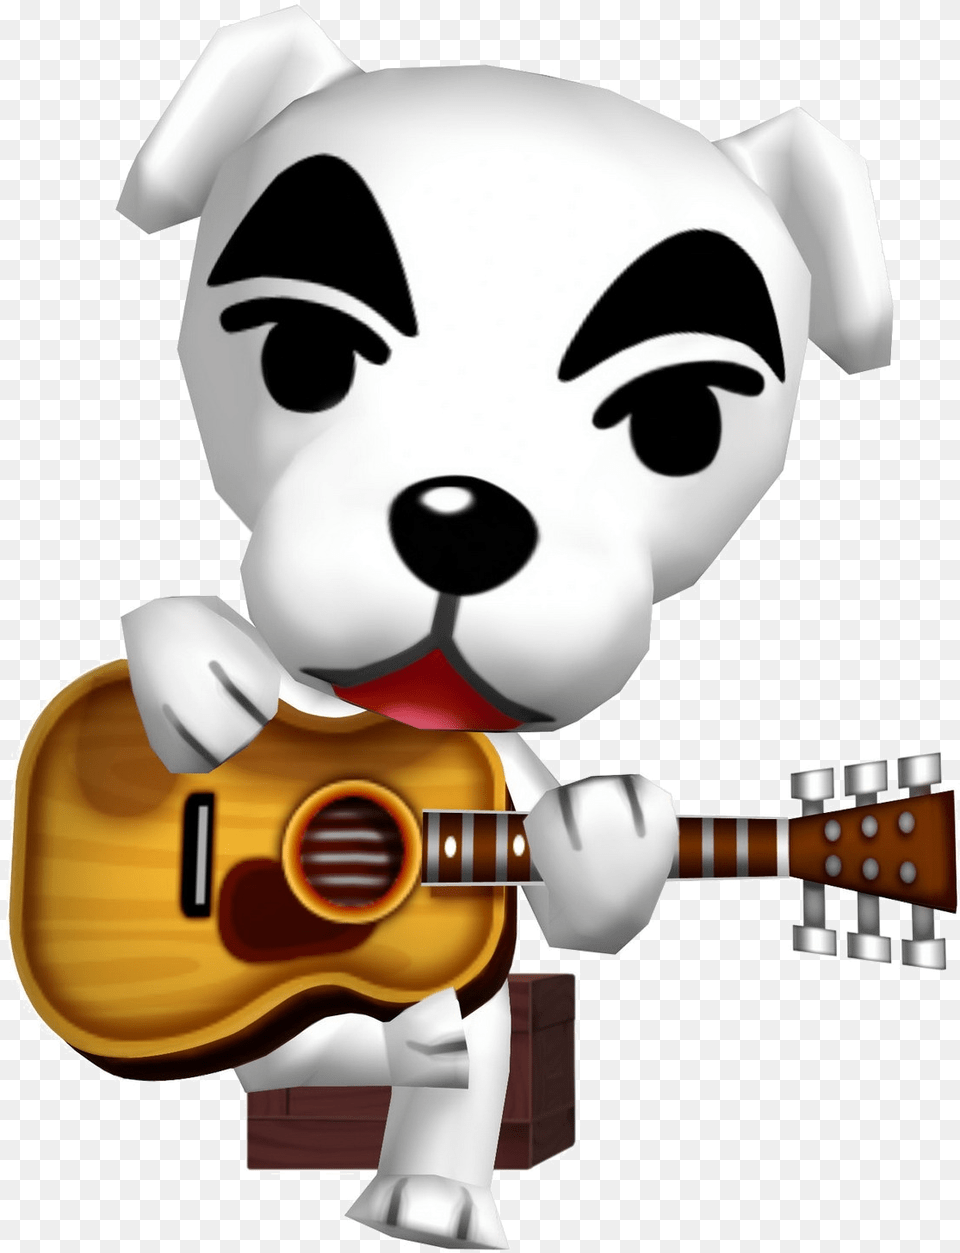 Animal Crossing Kk Slider Animal Crossing, Guitar, Musical Instrument Png Image